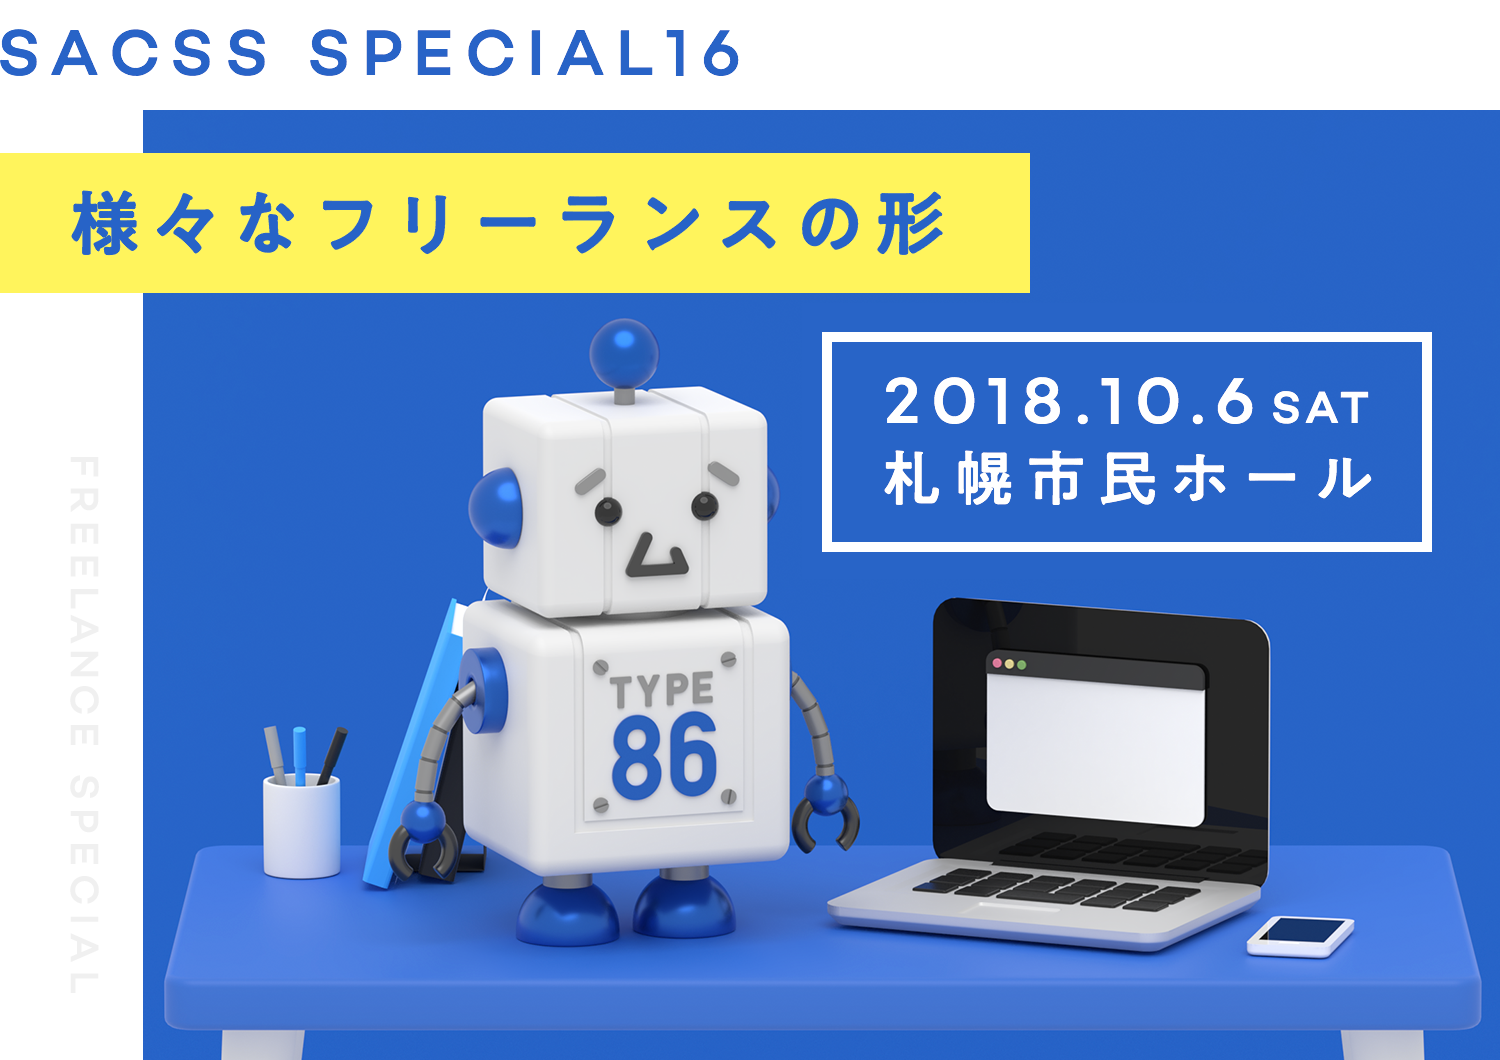 SaCSS 2018年10月6日『SaCSS Special16 : 様々なフリーランスの形』